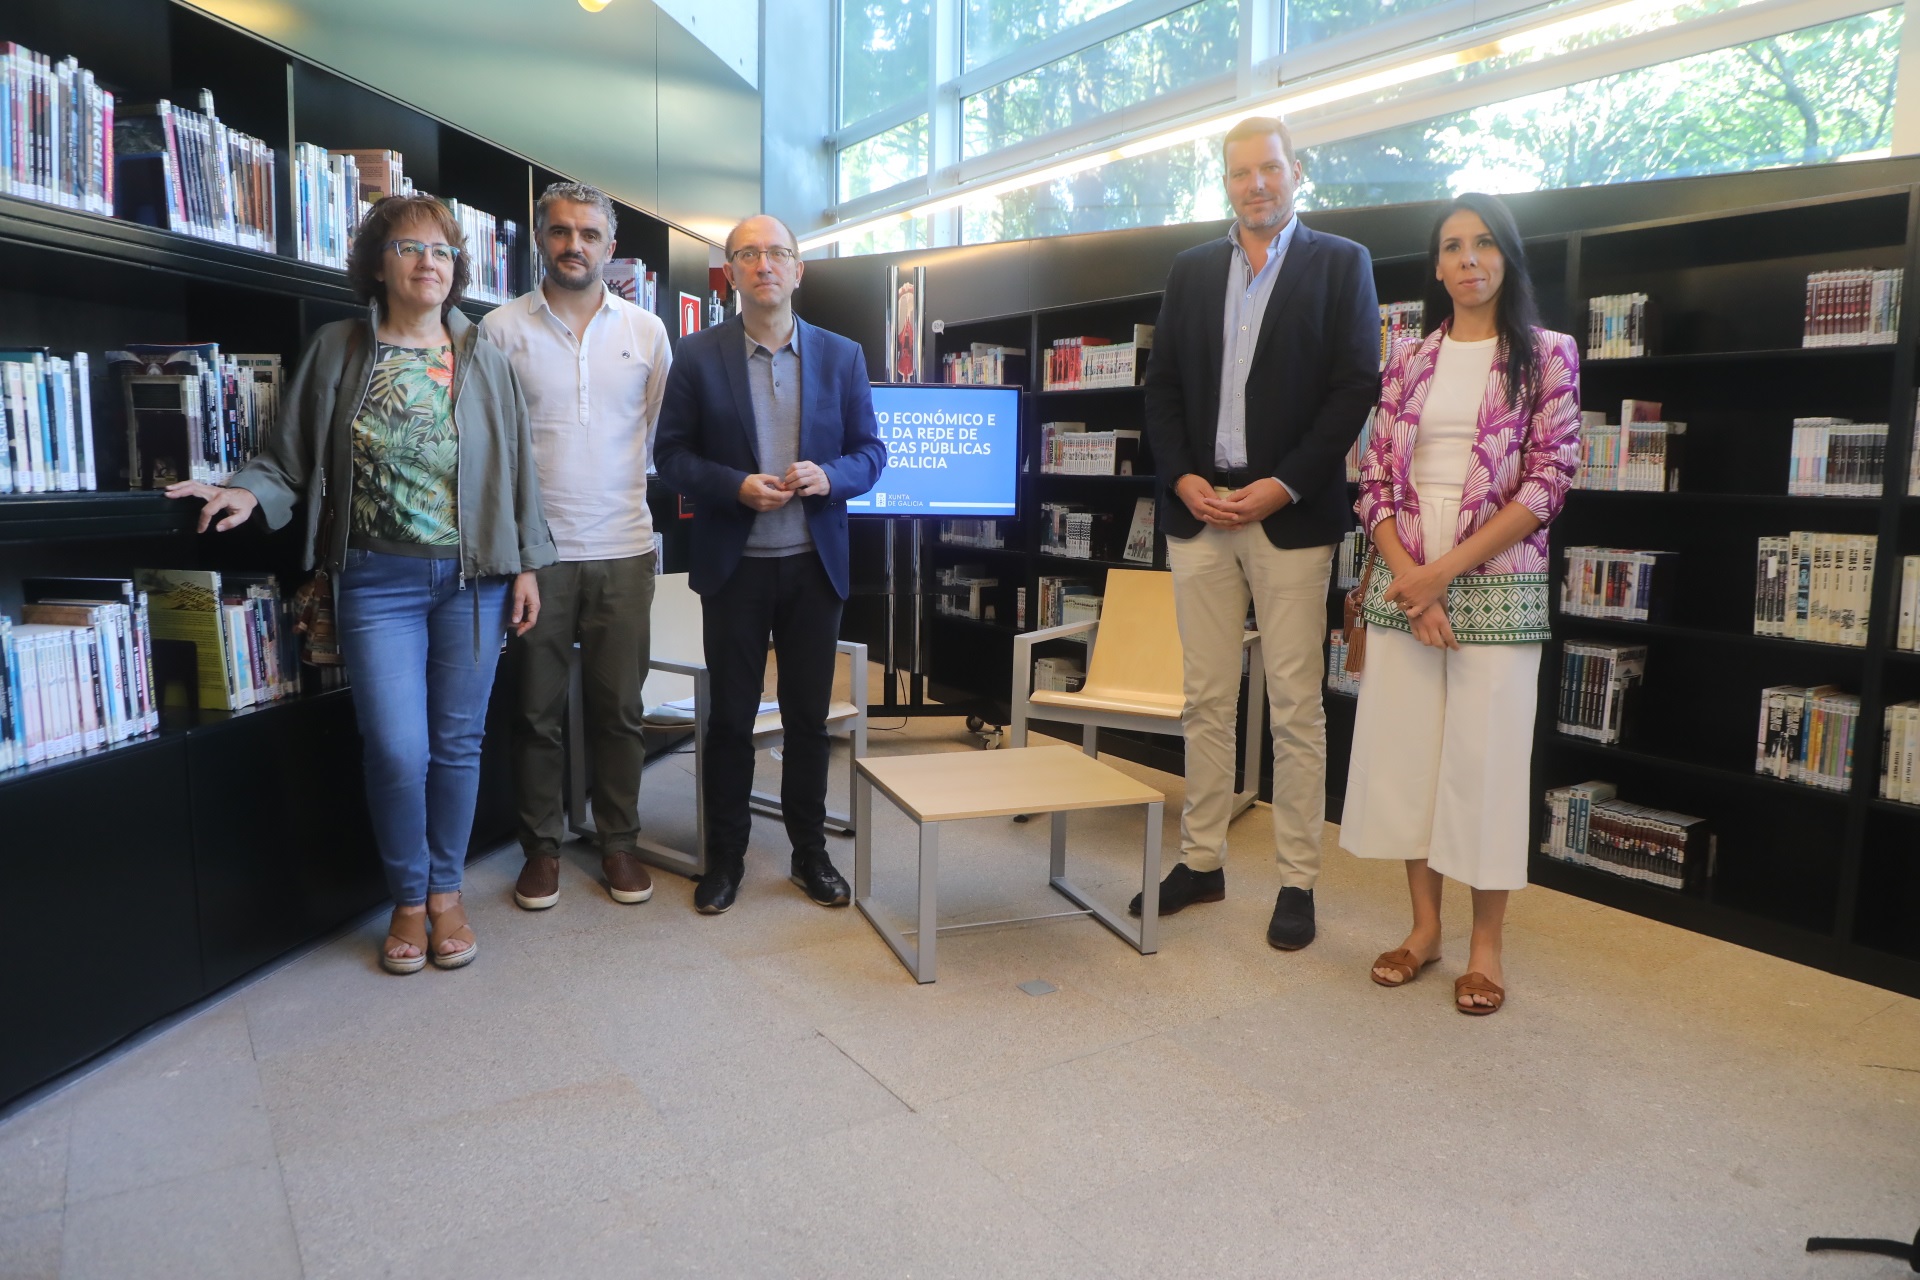 Image 2 of article A Xunta estima un retorno de 3,85€ por cada euro investido na Rede de Bibliotecas Públicas de Galicia